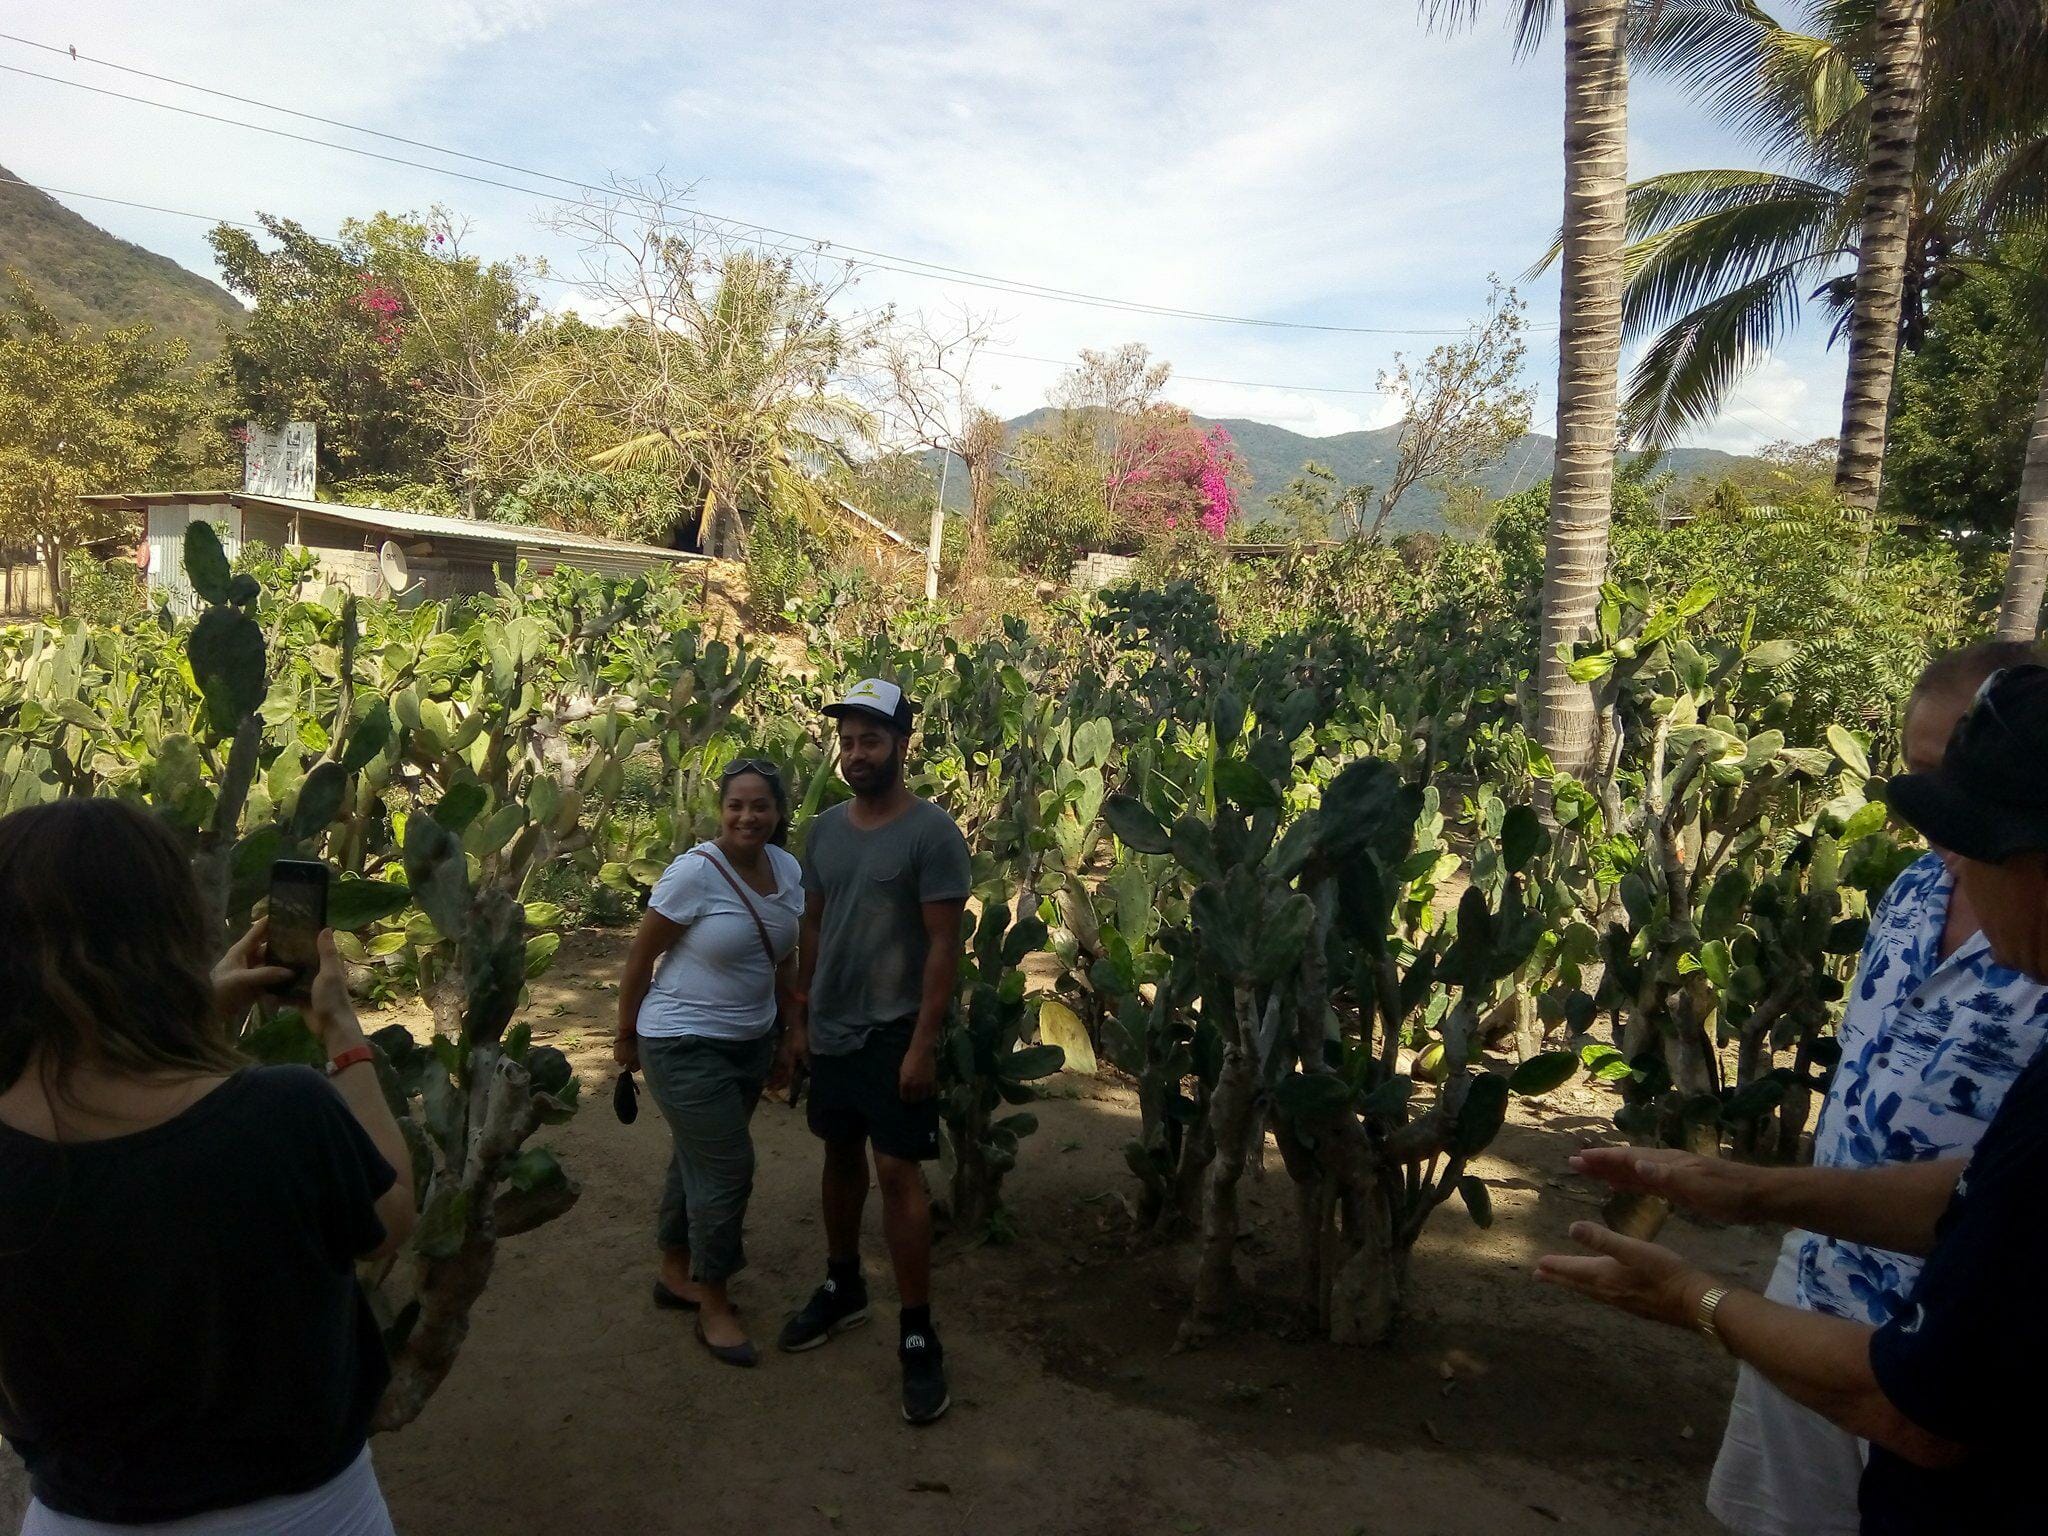 Large Huatulco Cactus Field